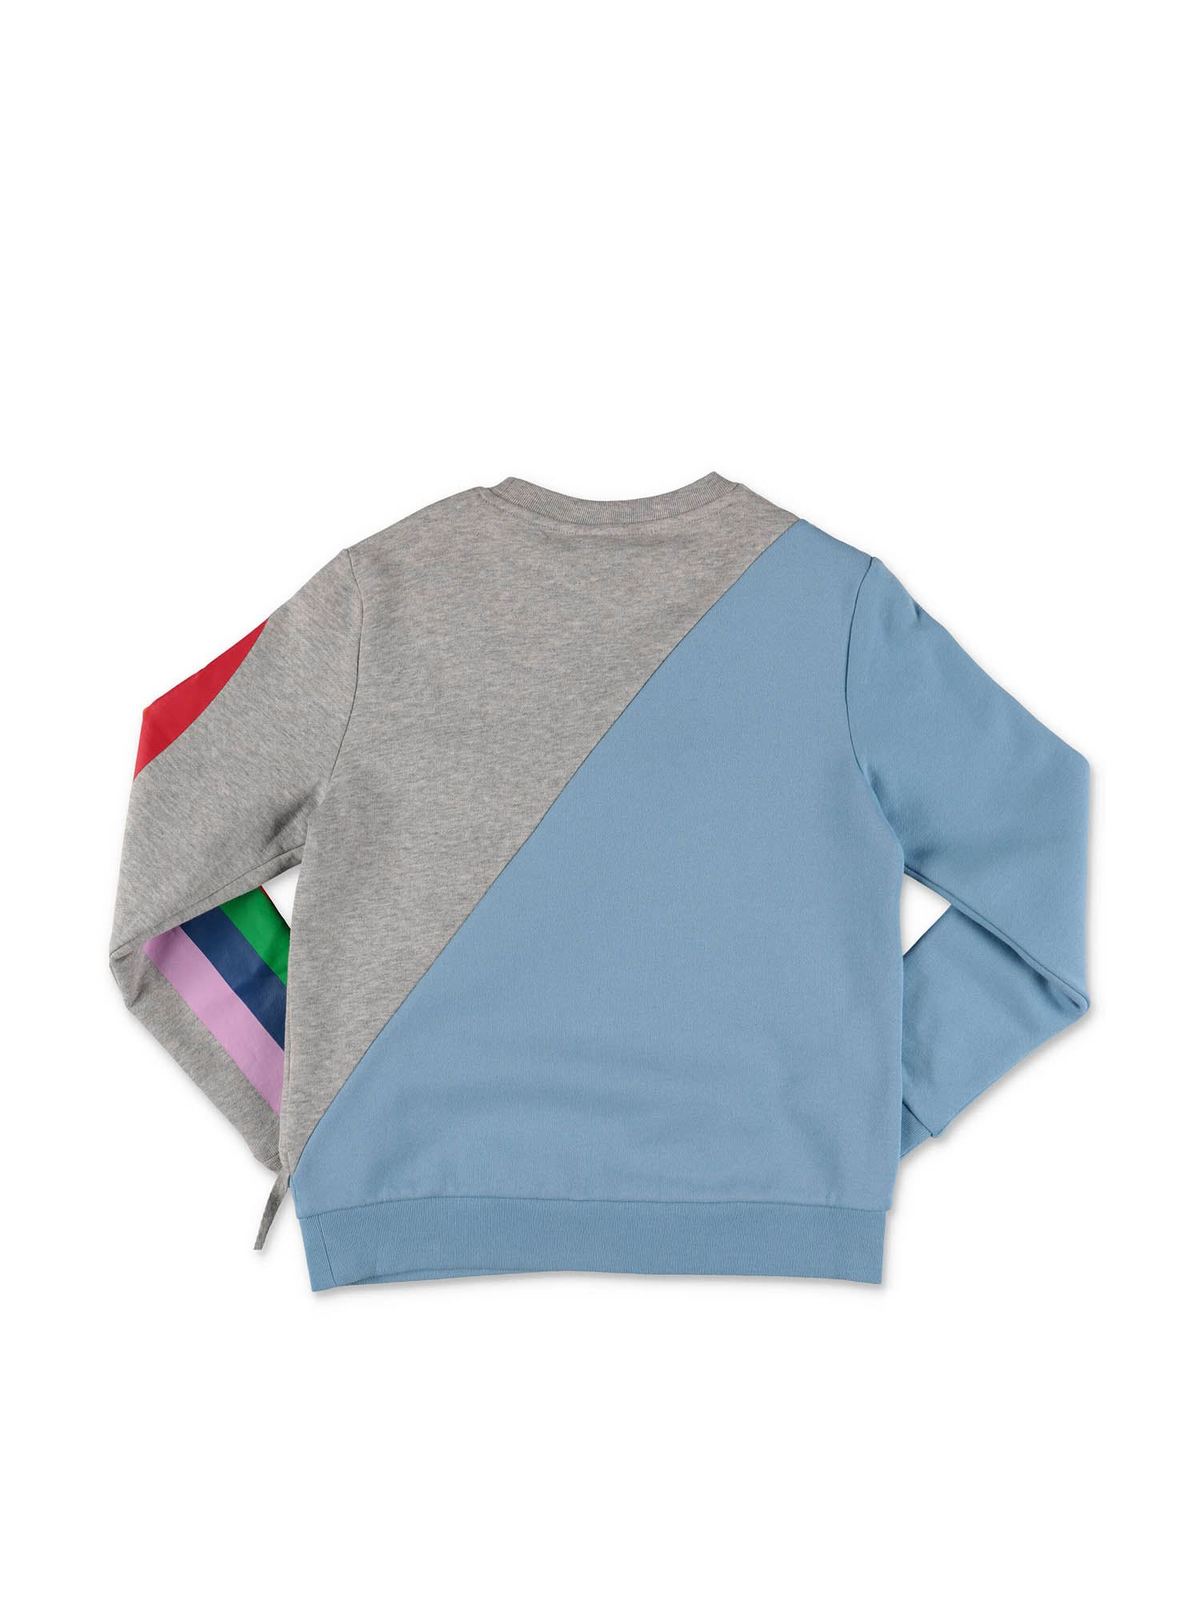 Stella McCartney Kids - Gray and blue sweatshirt with fringes ...